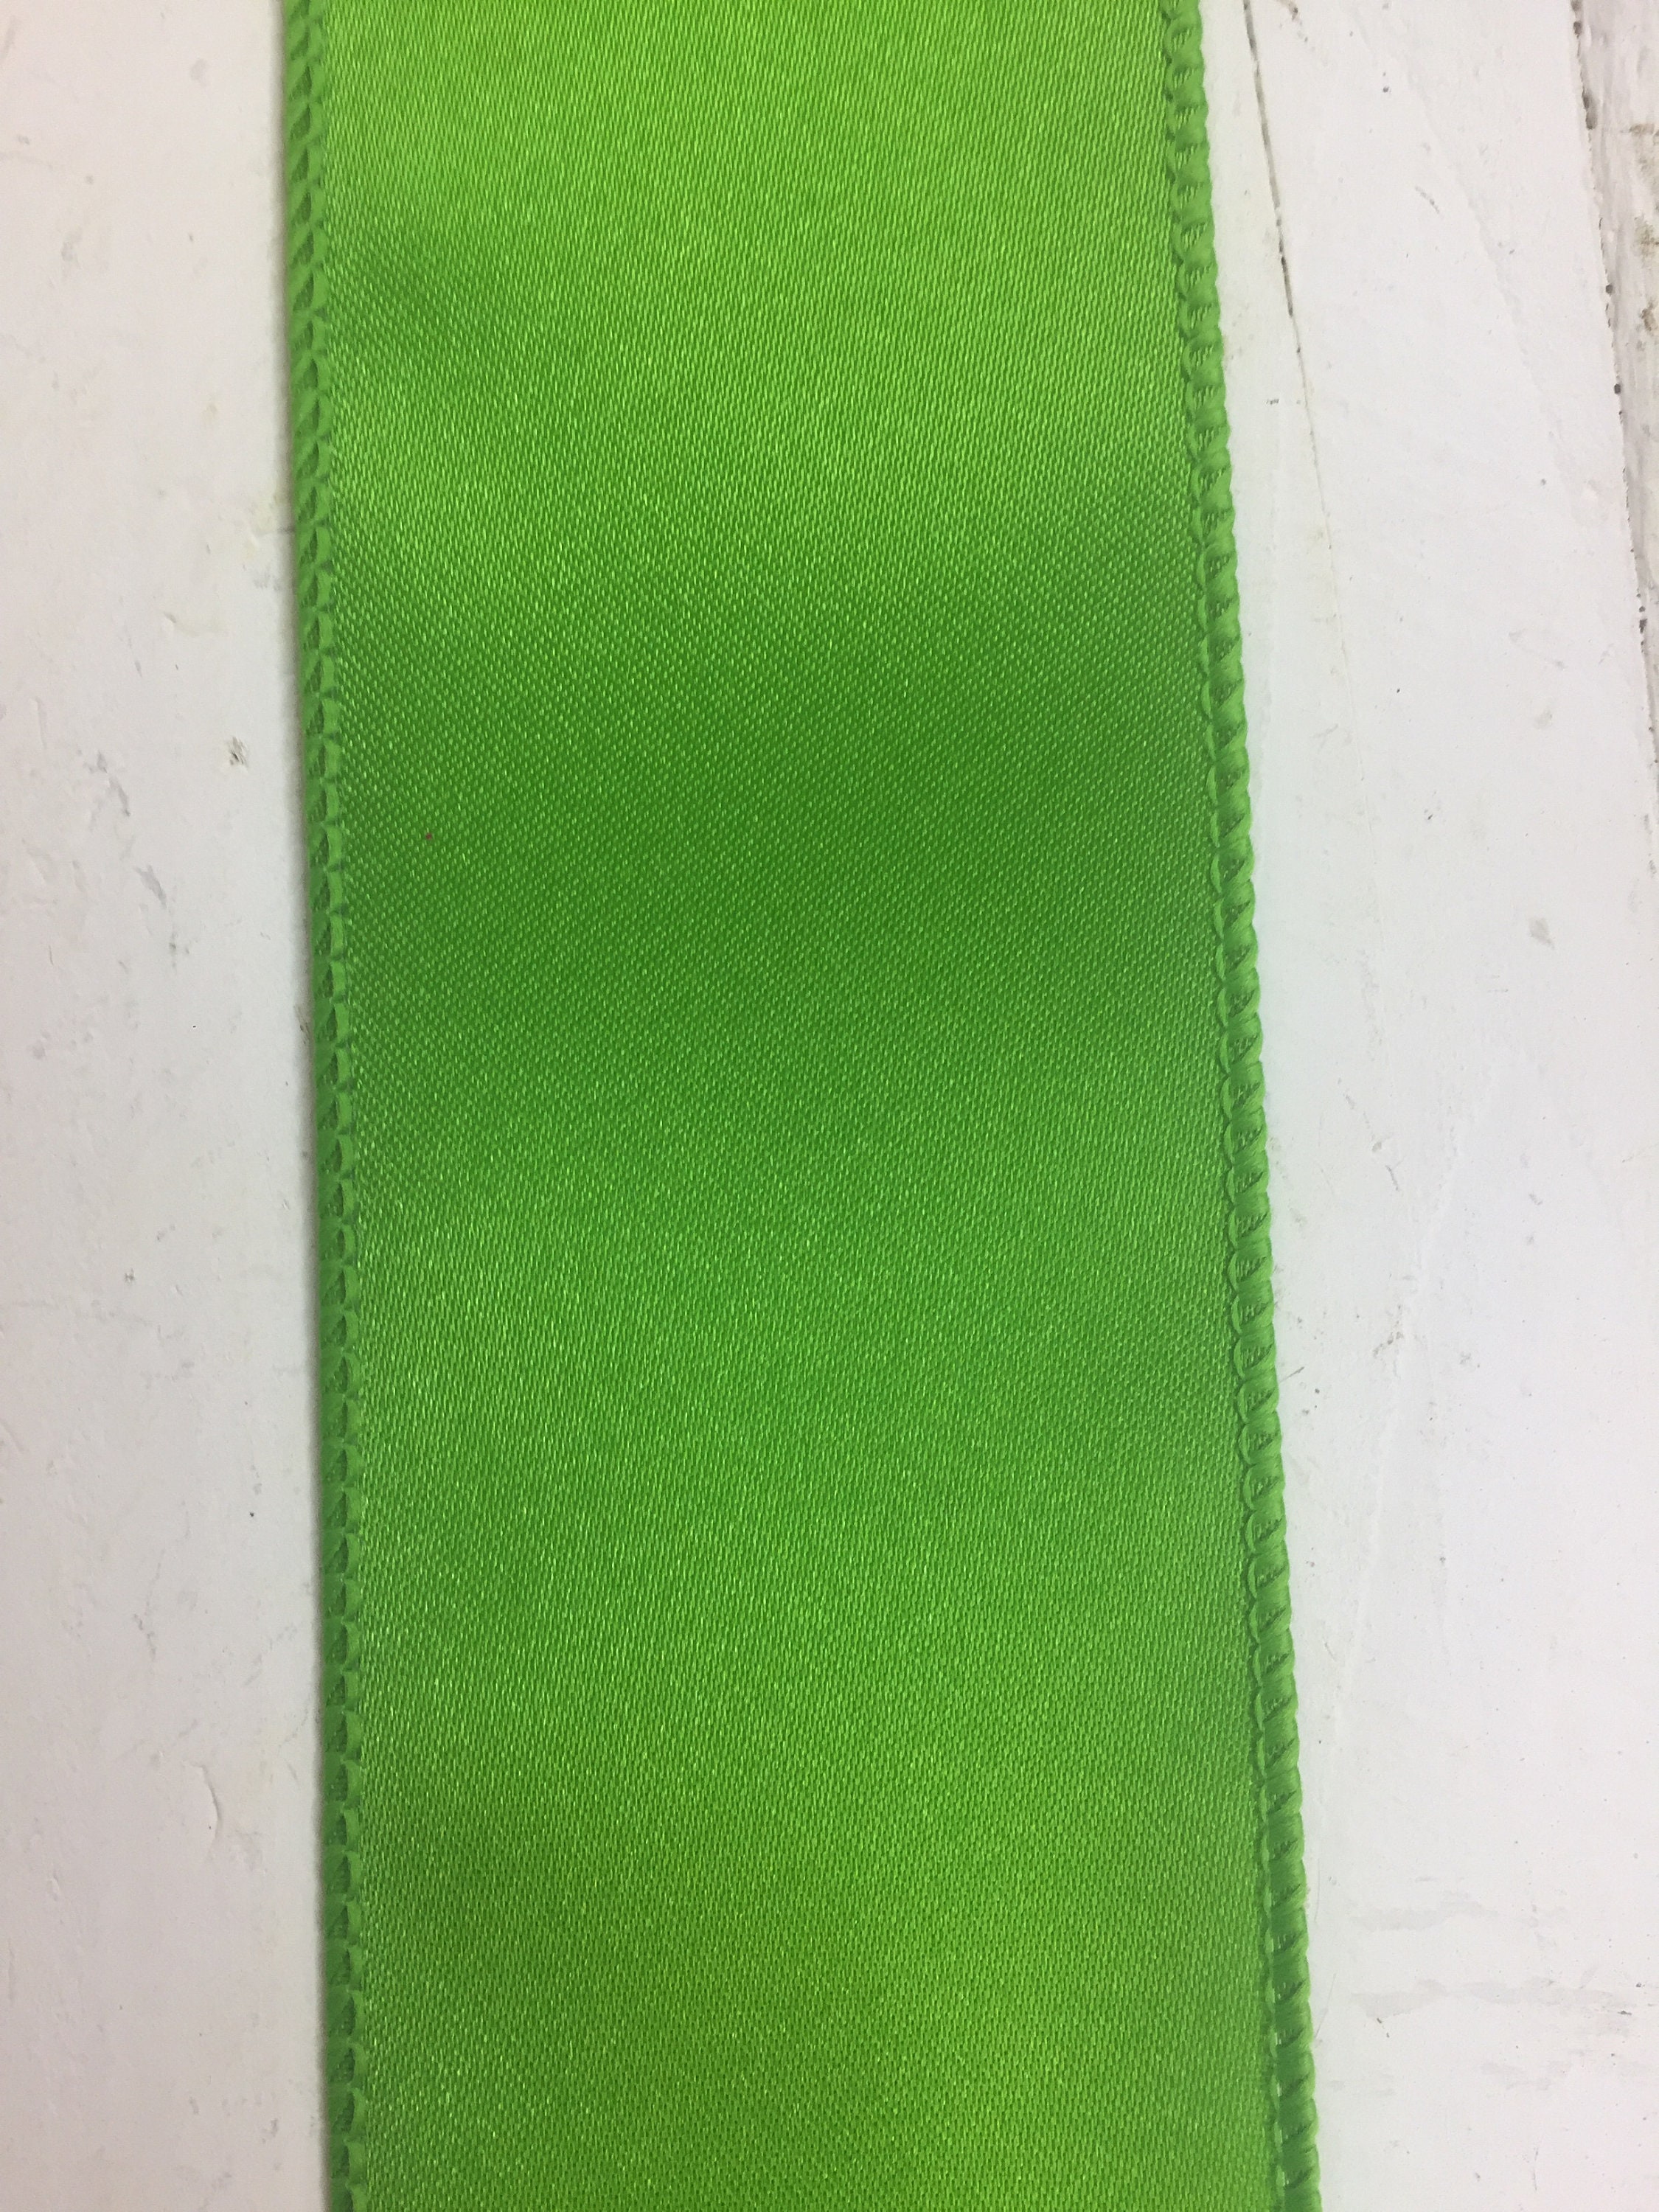 1 Lime Green Velvet Ribbon on 10 YD Roll - Kelea's Florals